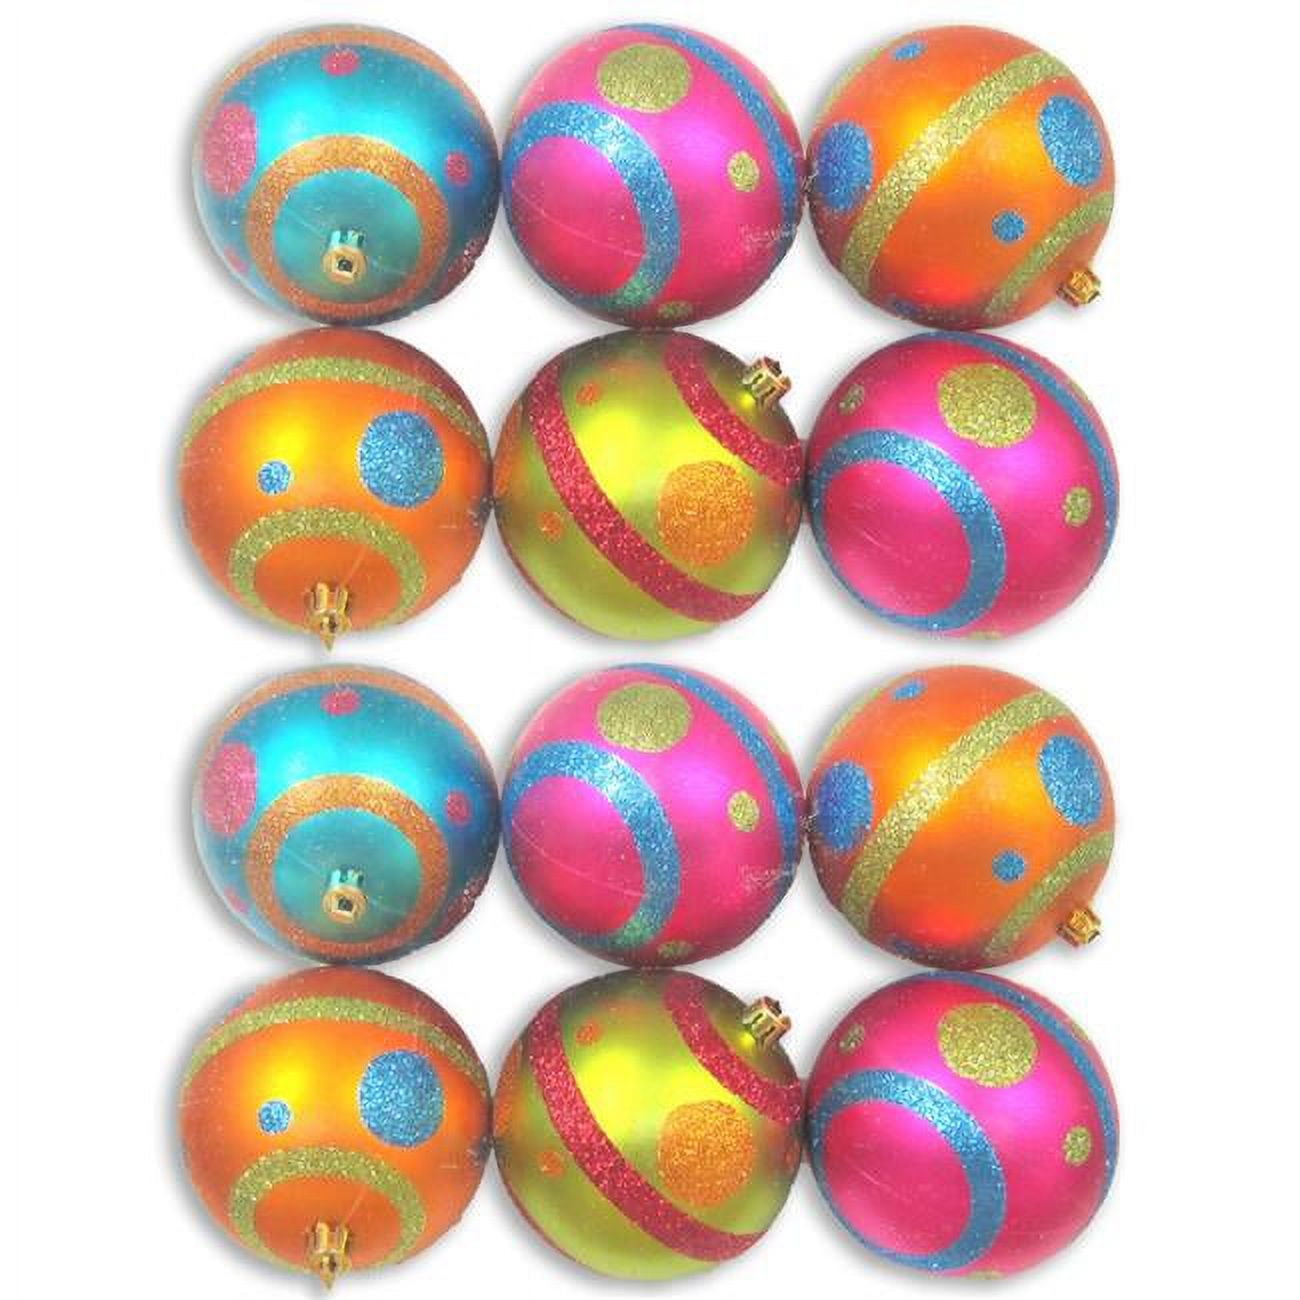 Mardi Gras Balls 12pcs 2.3 Inch Big Christmas Ball Multicolor Ball